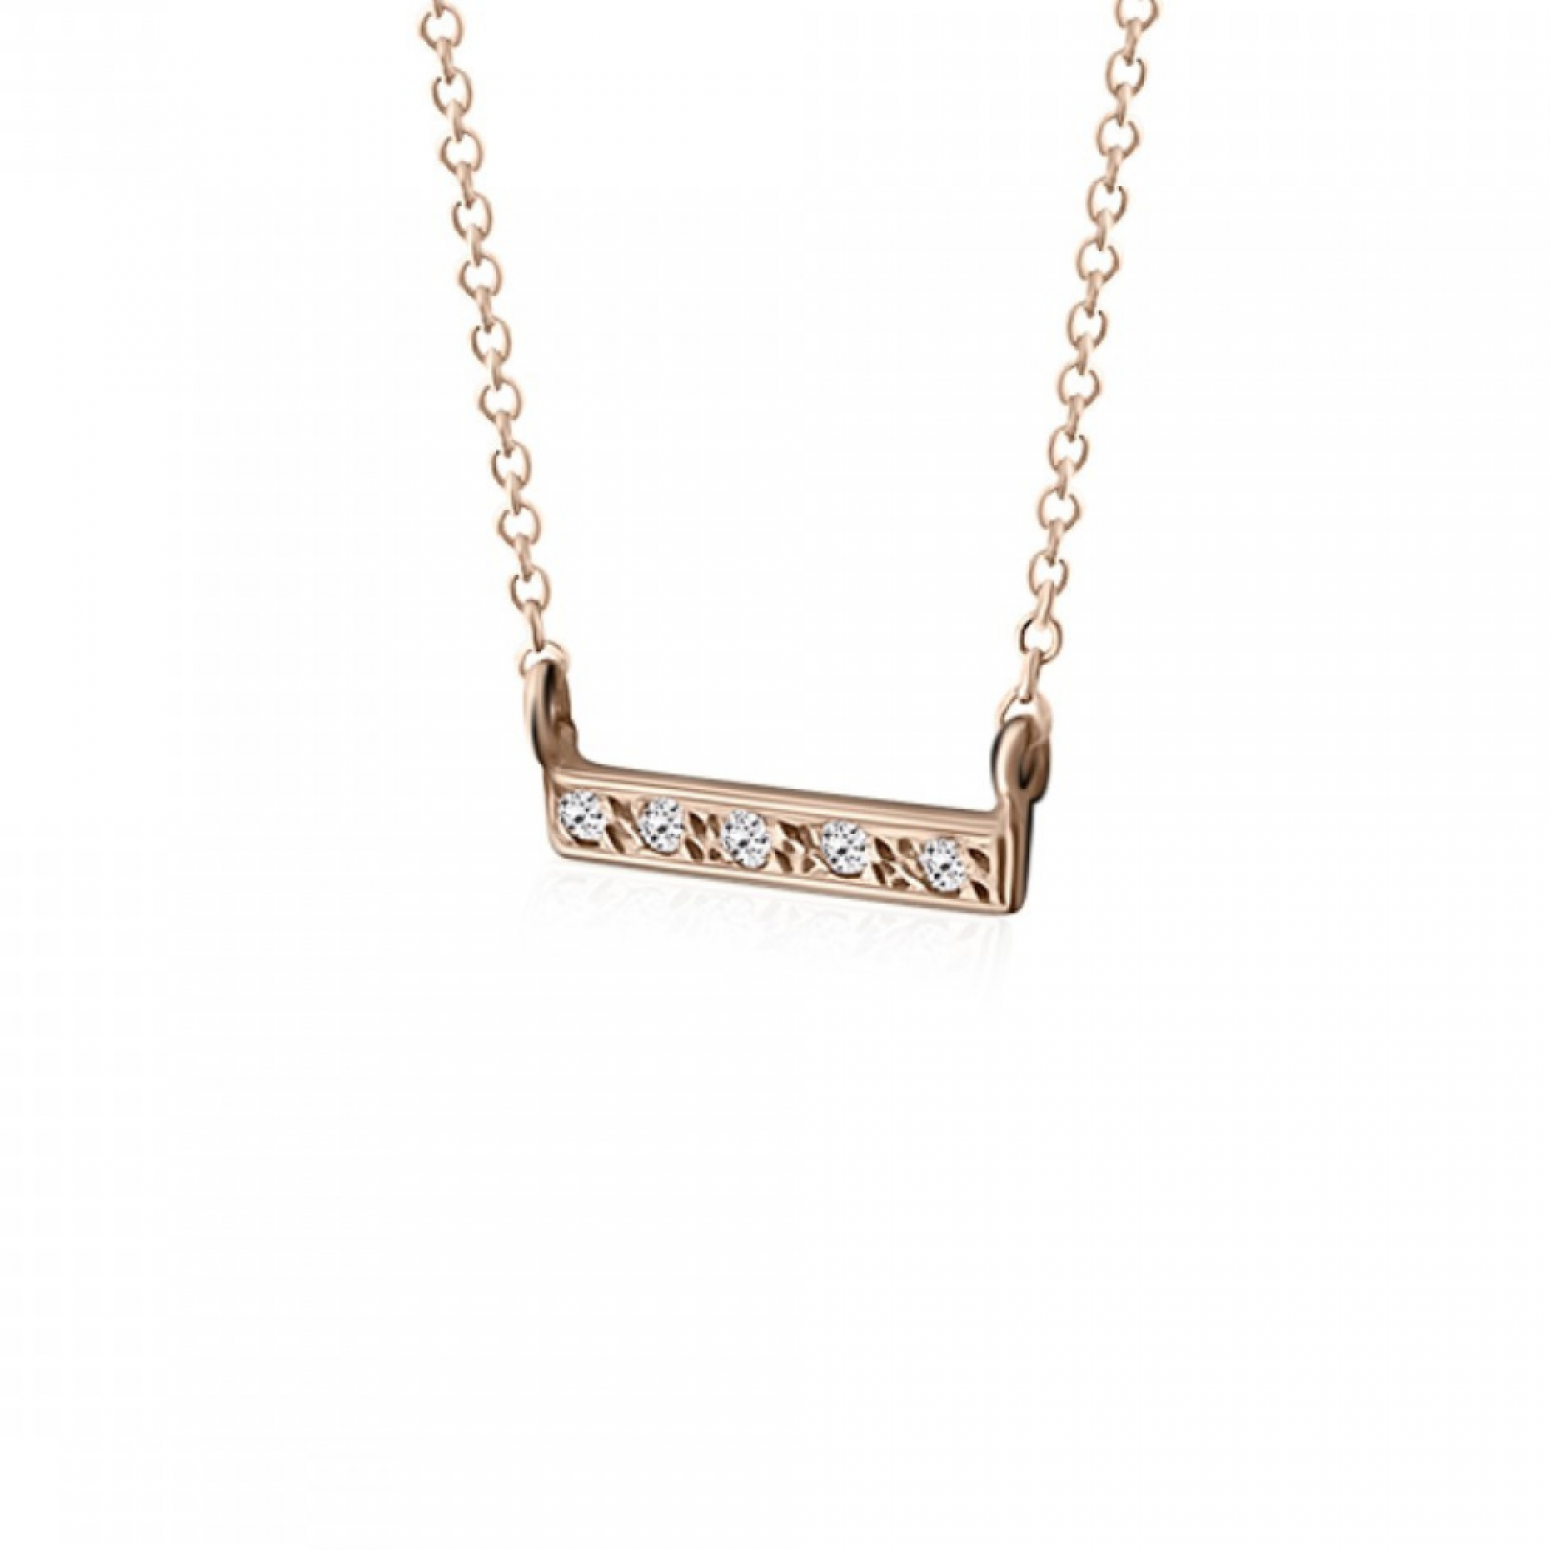 Bar necklace, Κ9 pink gold with zircon, ko4420 NECKLACES Κοσμηματα - chrilia.gr